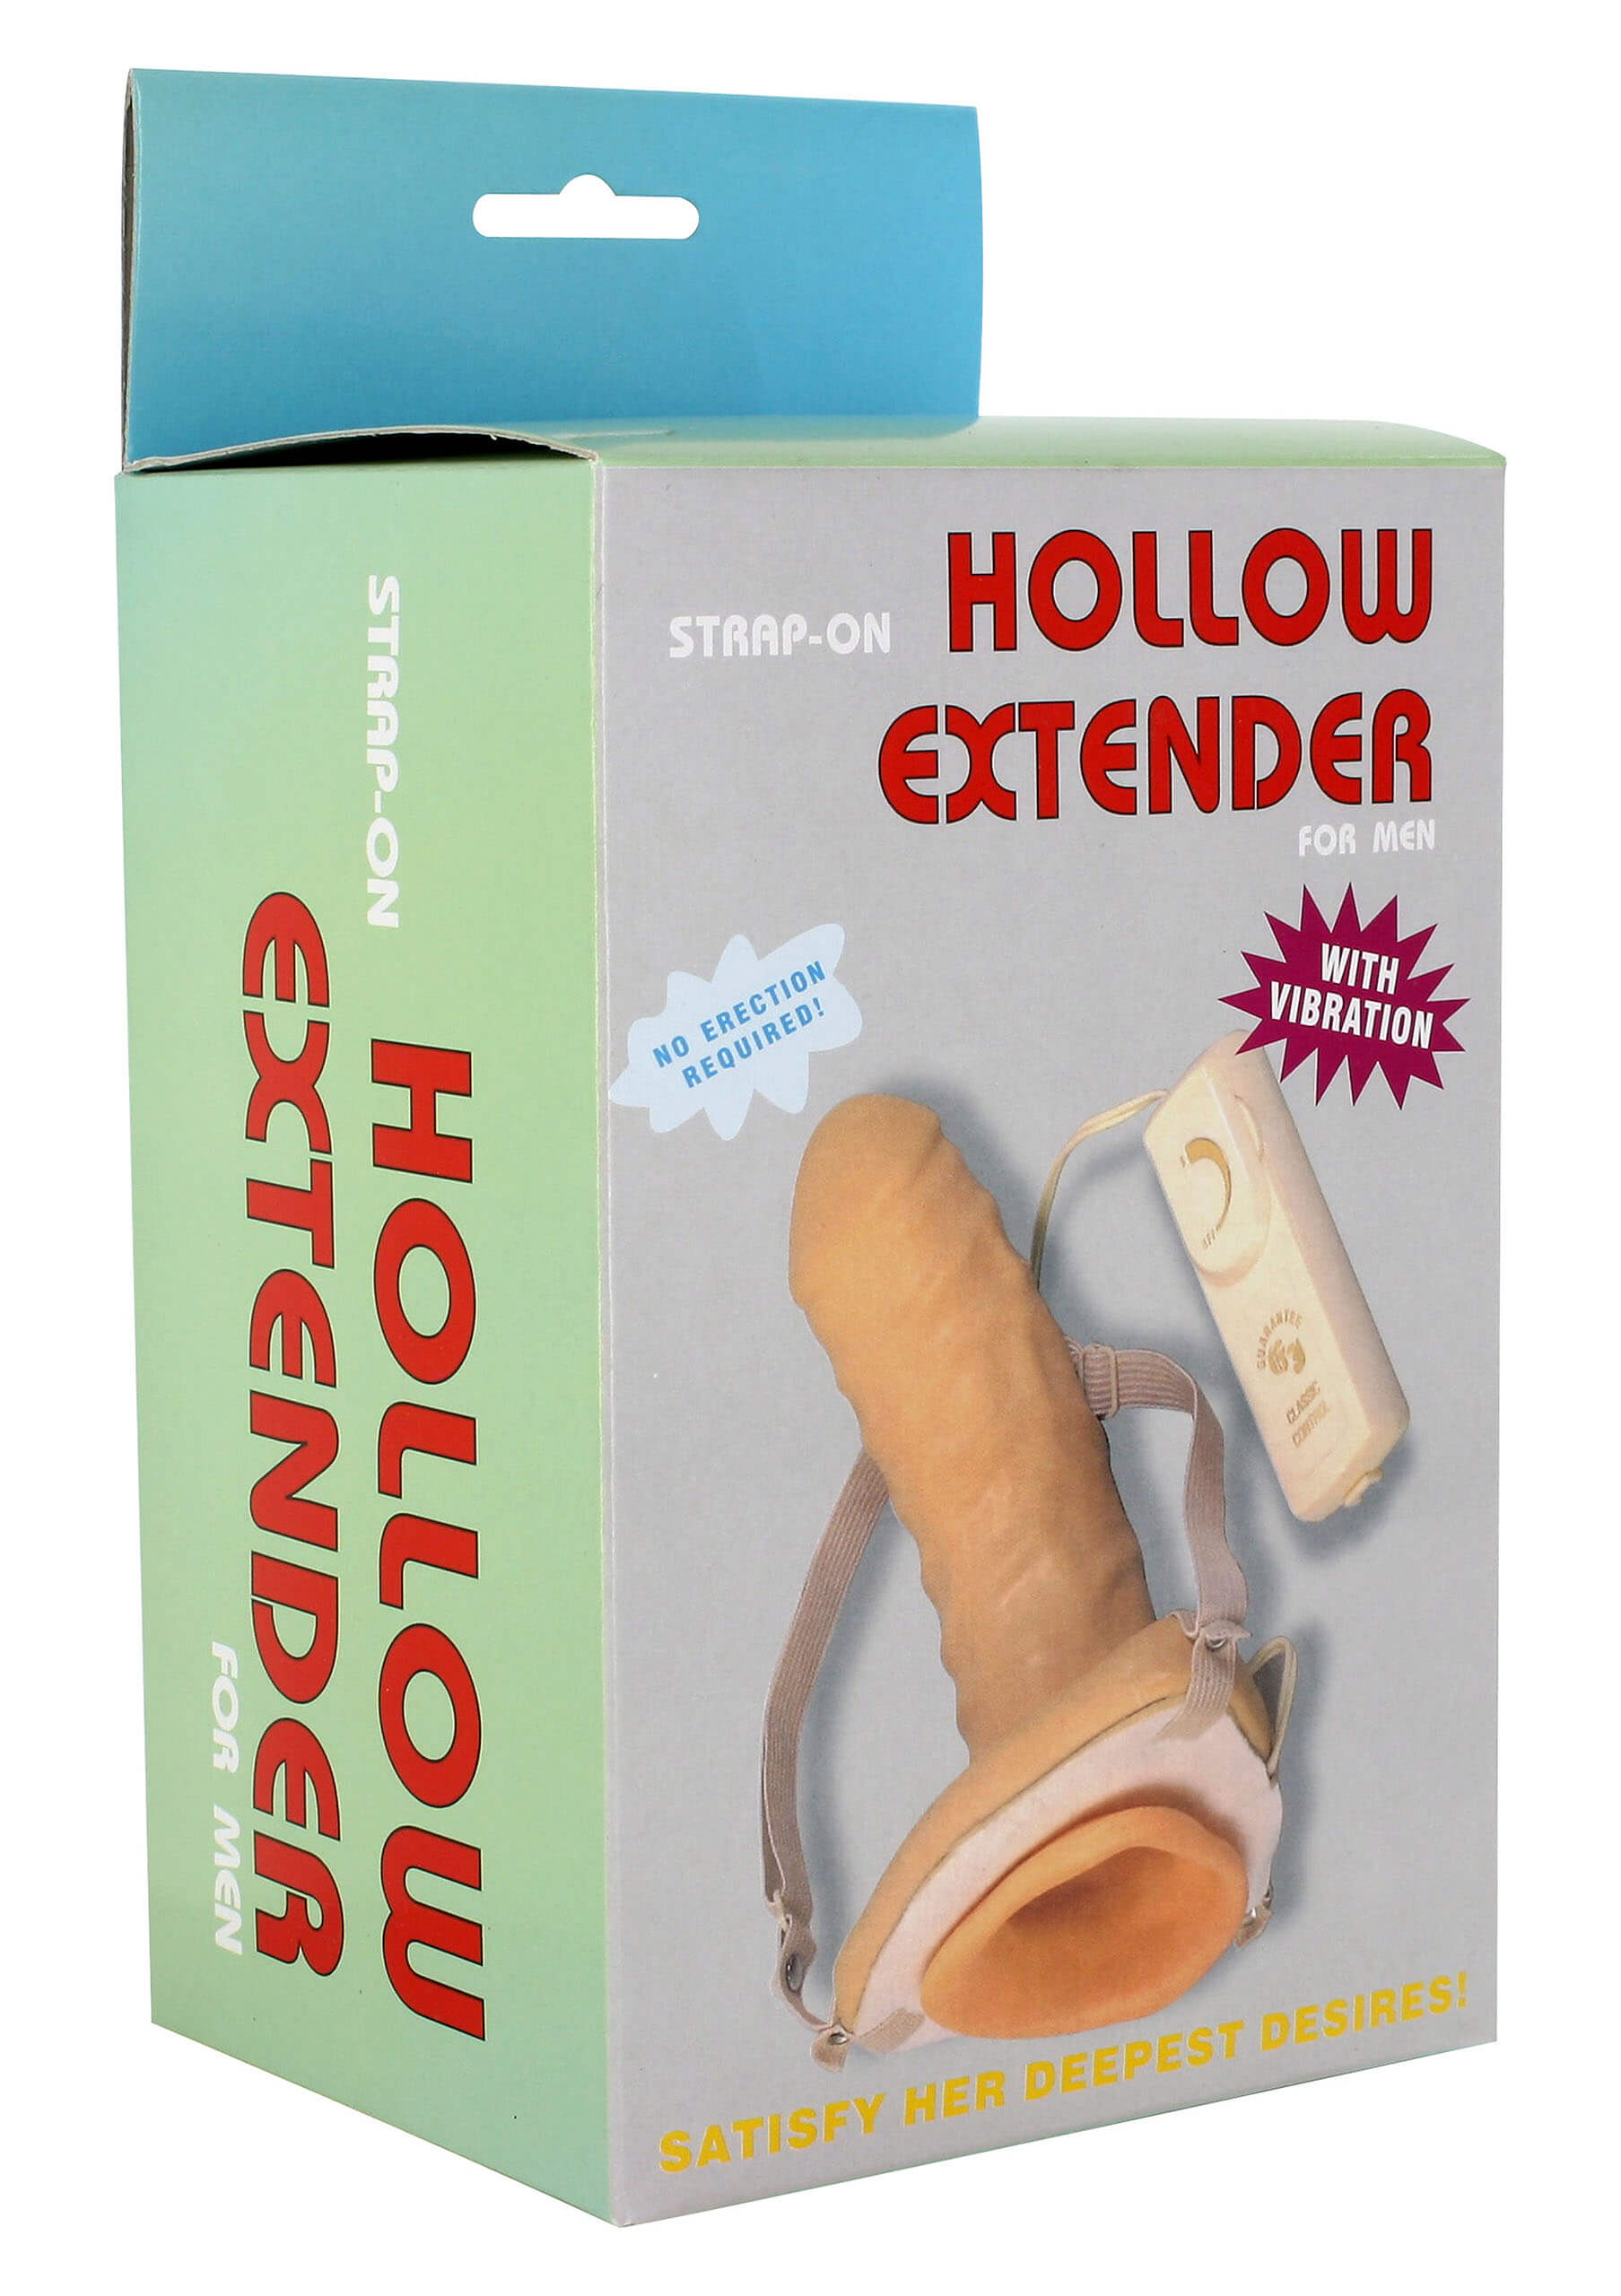 Pripínací penis Hollow Extender vibračný